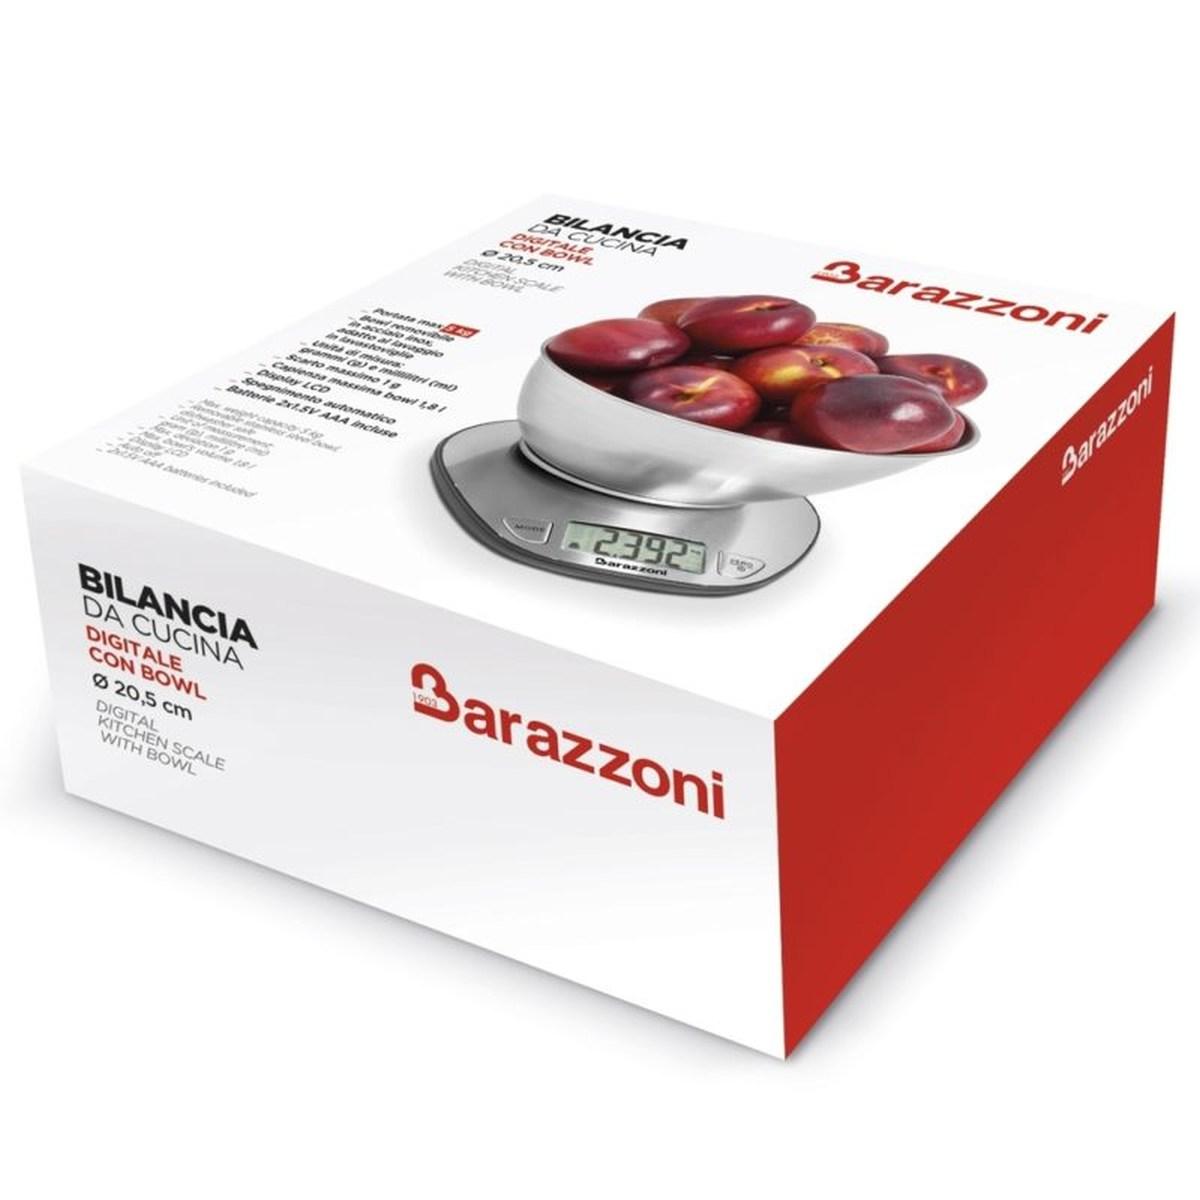 Bilancia Cucina Digitale Barazzoni Acciaio kg.5